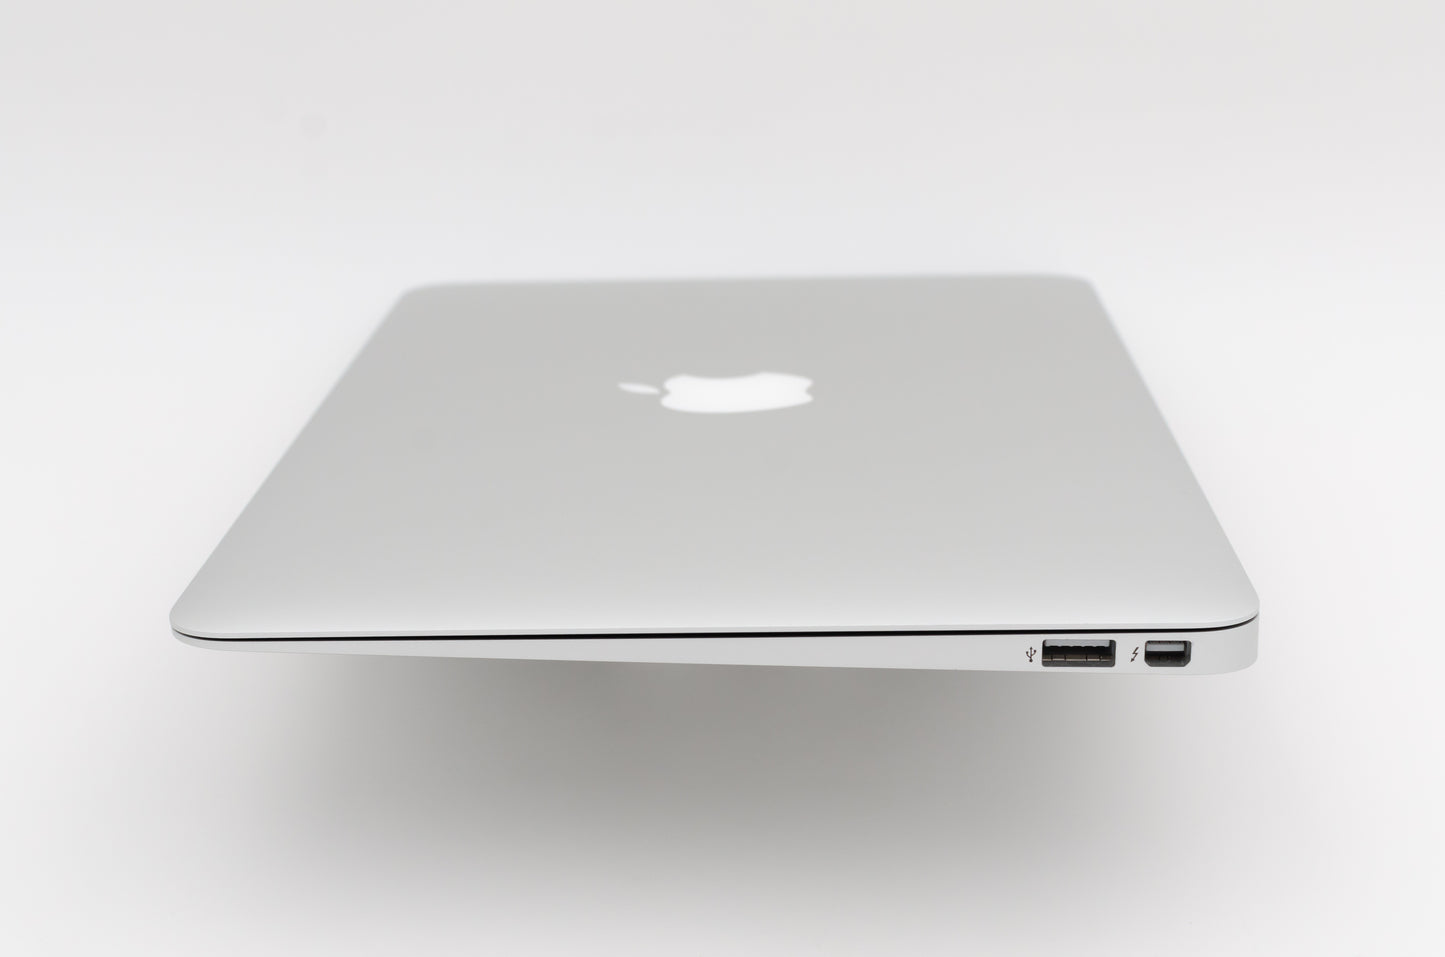 apple-mid-2013-11.6-inch-macbook-air-a1465-aluminum-dci7 - 1.7ghz processor, 4gb ram, hd 5000 - 1.5gb gpu-md711ll/a-3